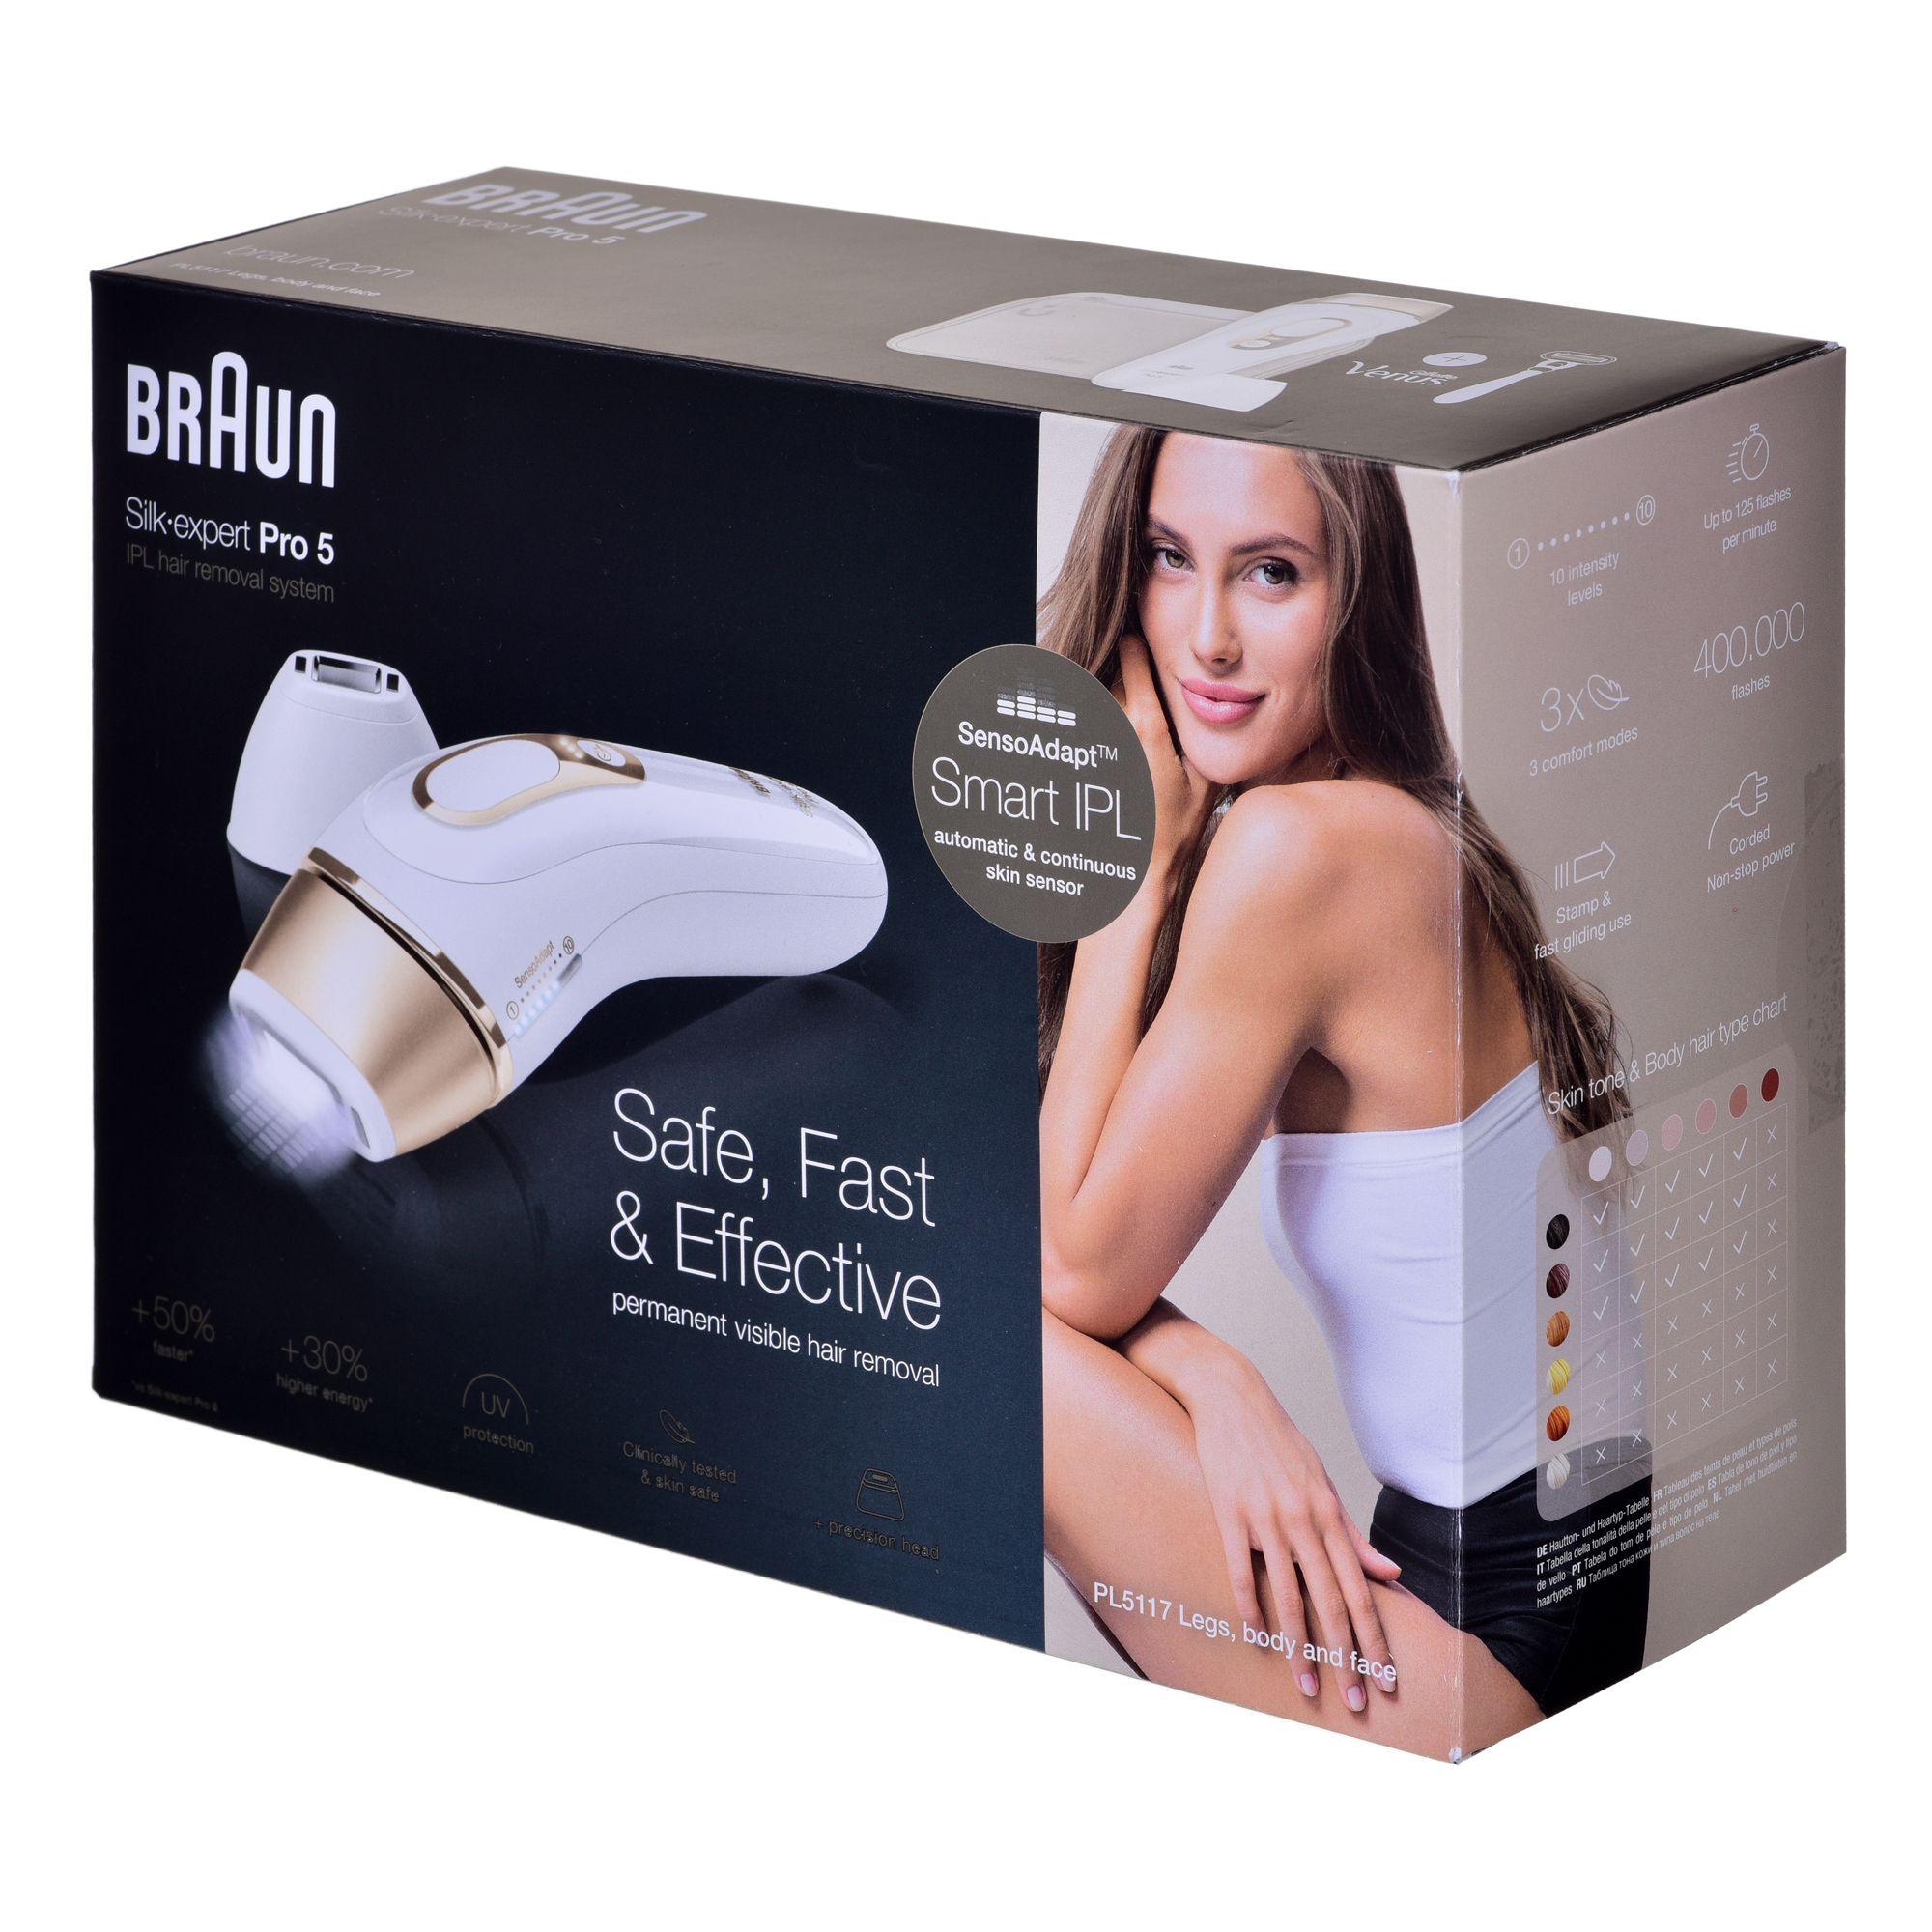 Braun Silk-expert Pro Silk·expert Pro 5 PL5117 Latest Generation IPL, Permanent Hair Removal, White&Gold